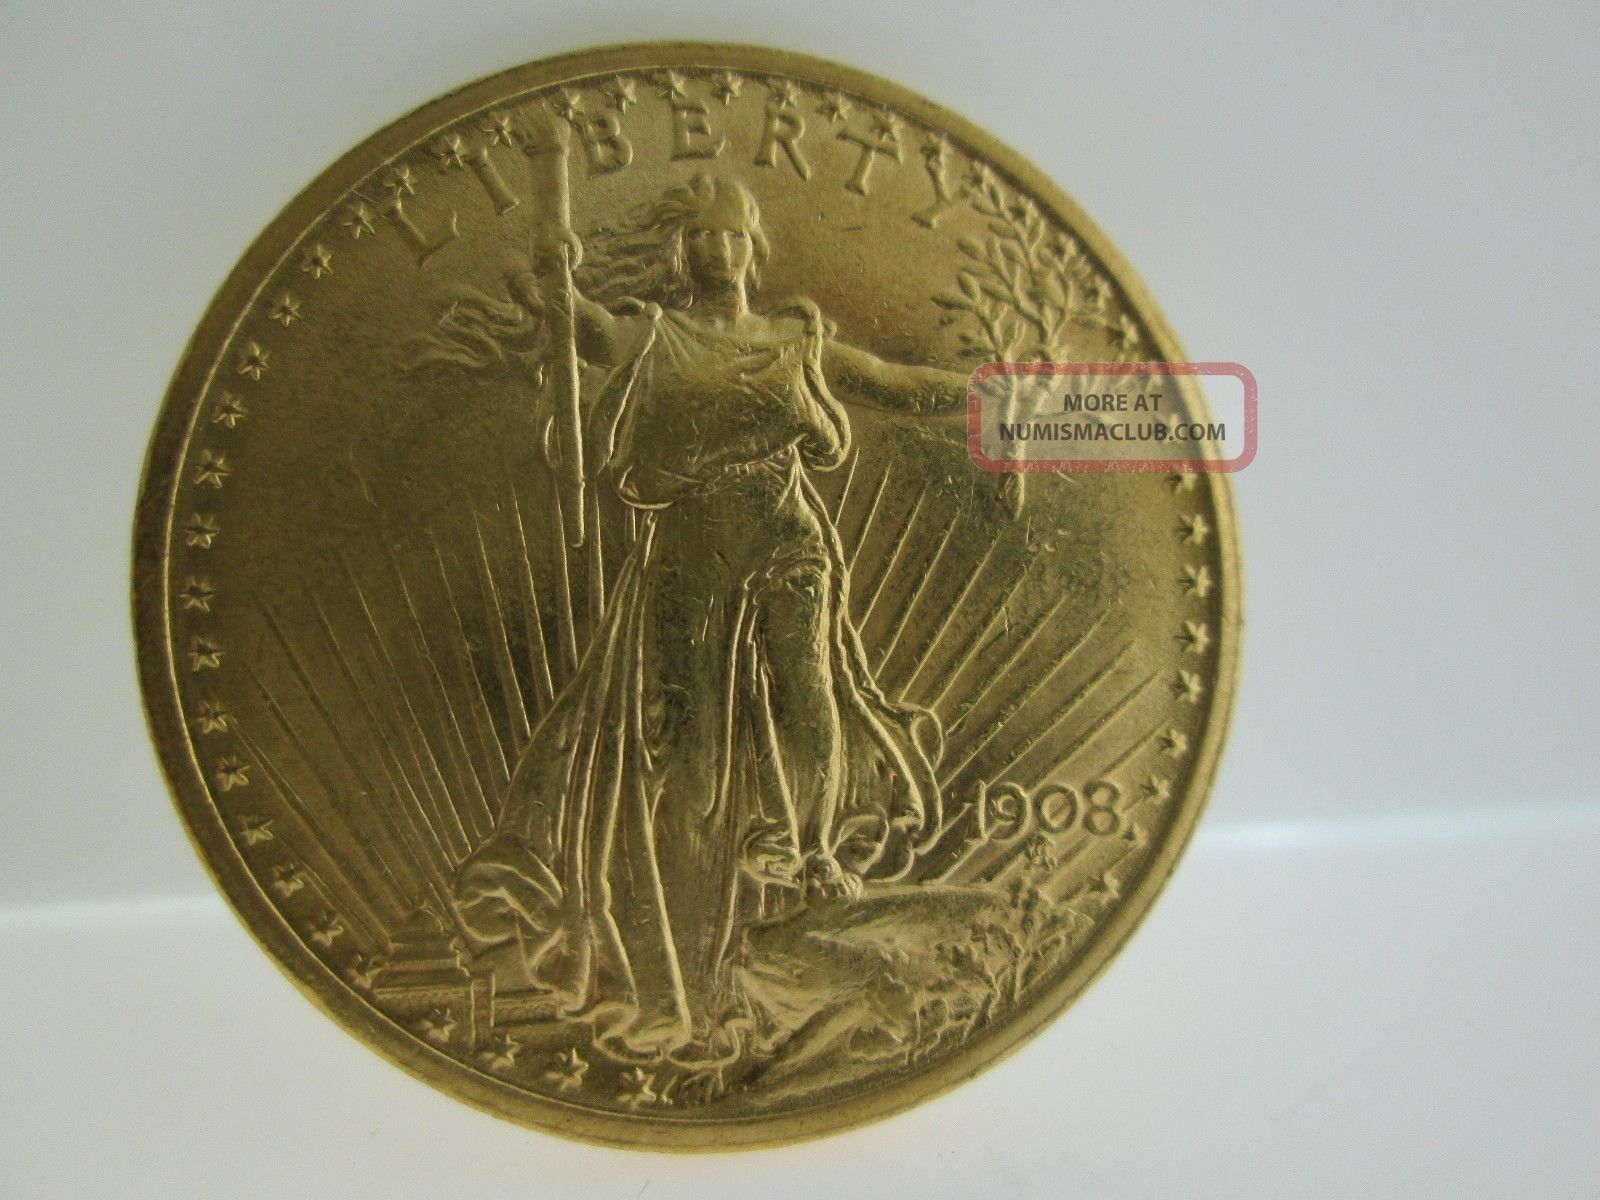 1908 $20 Saint - Gaudens Walking Liberty Double Eagle Gold Coin